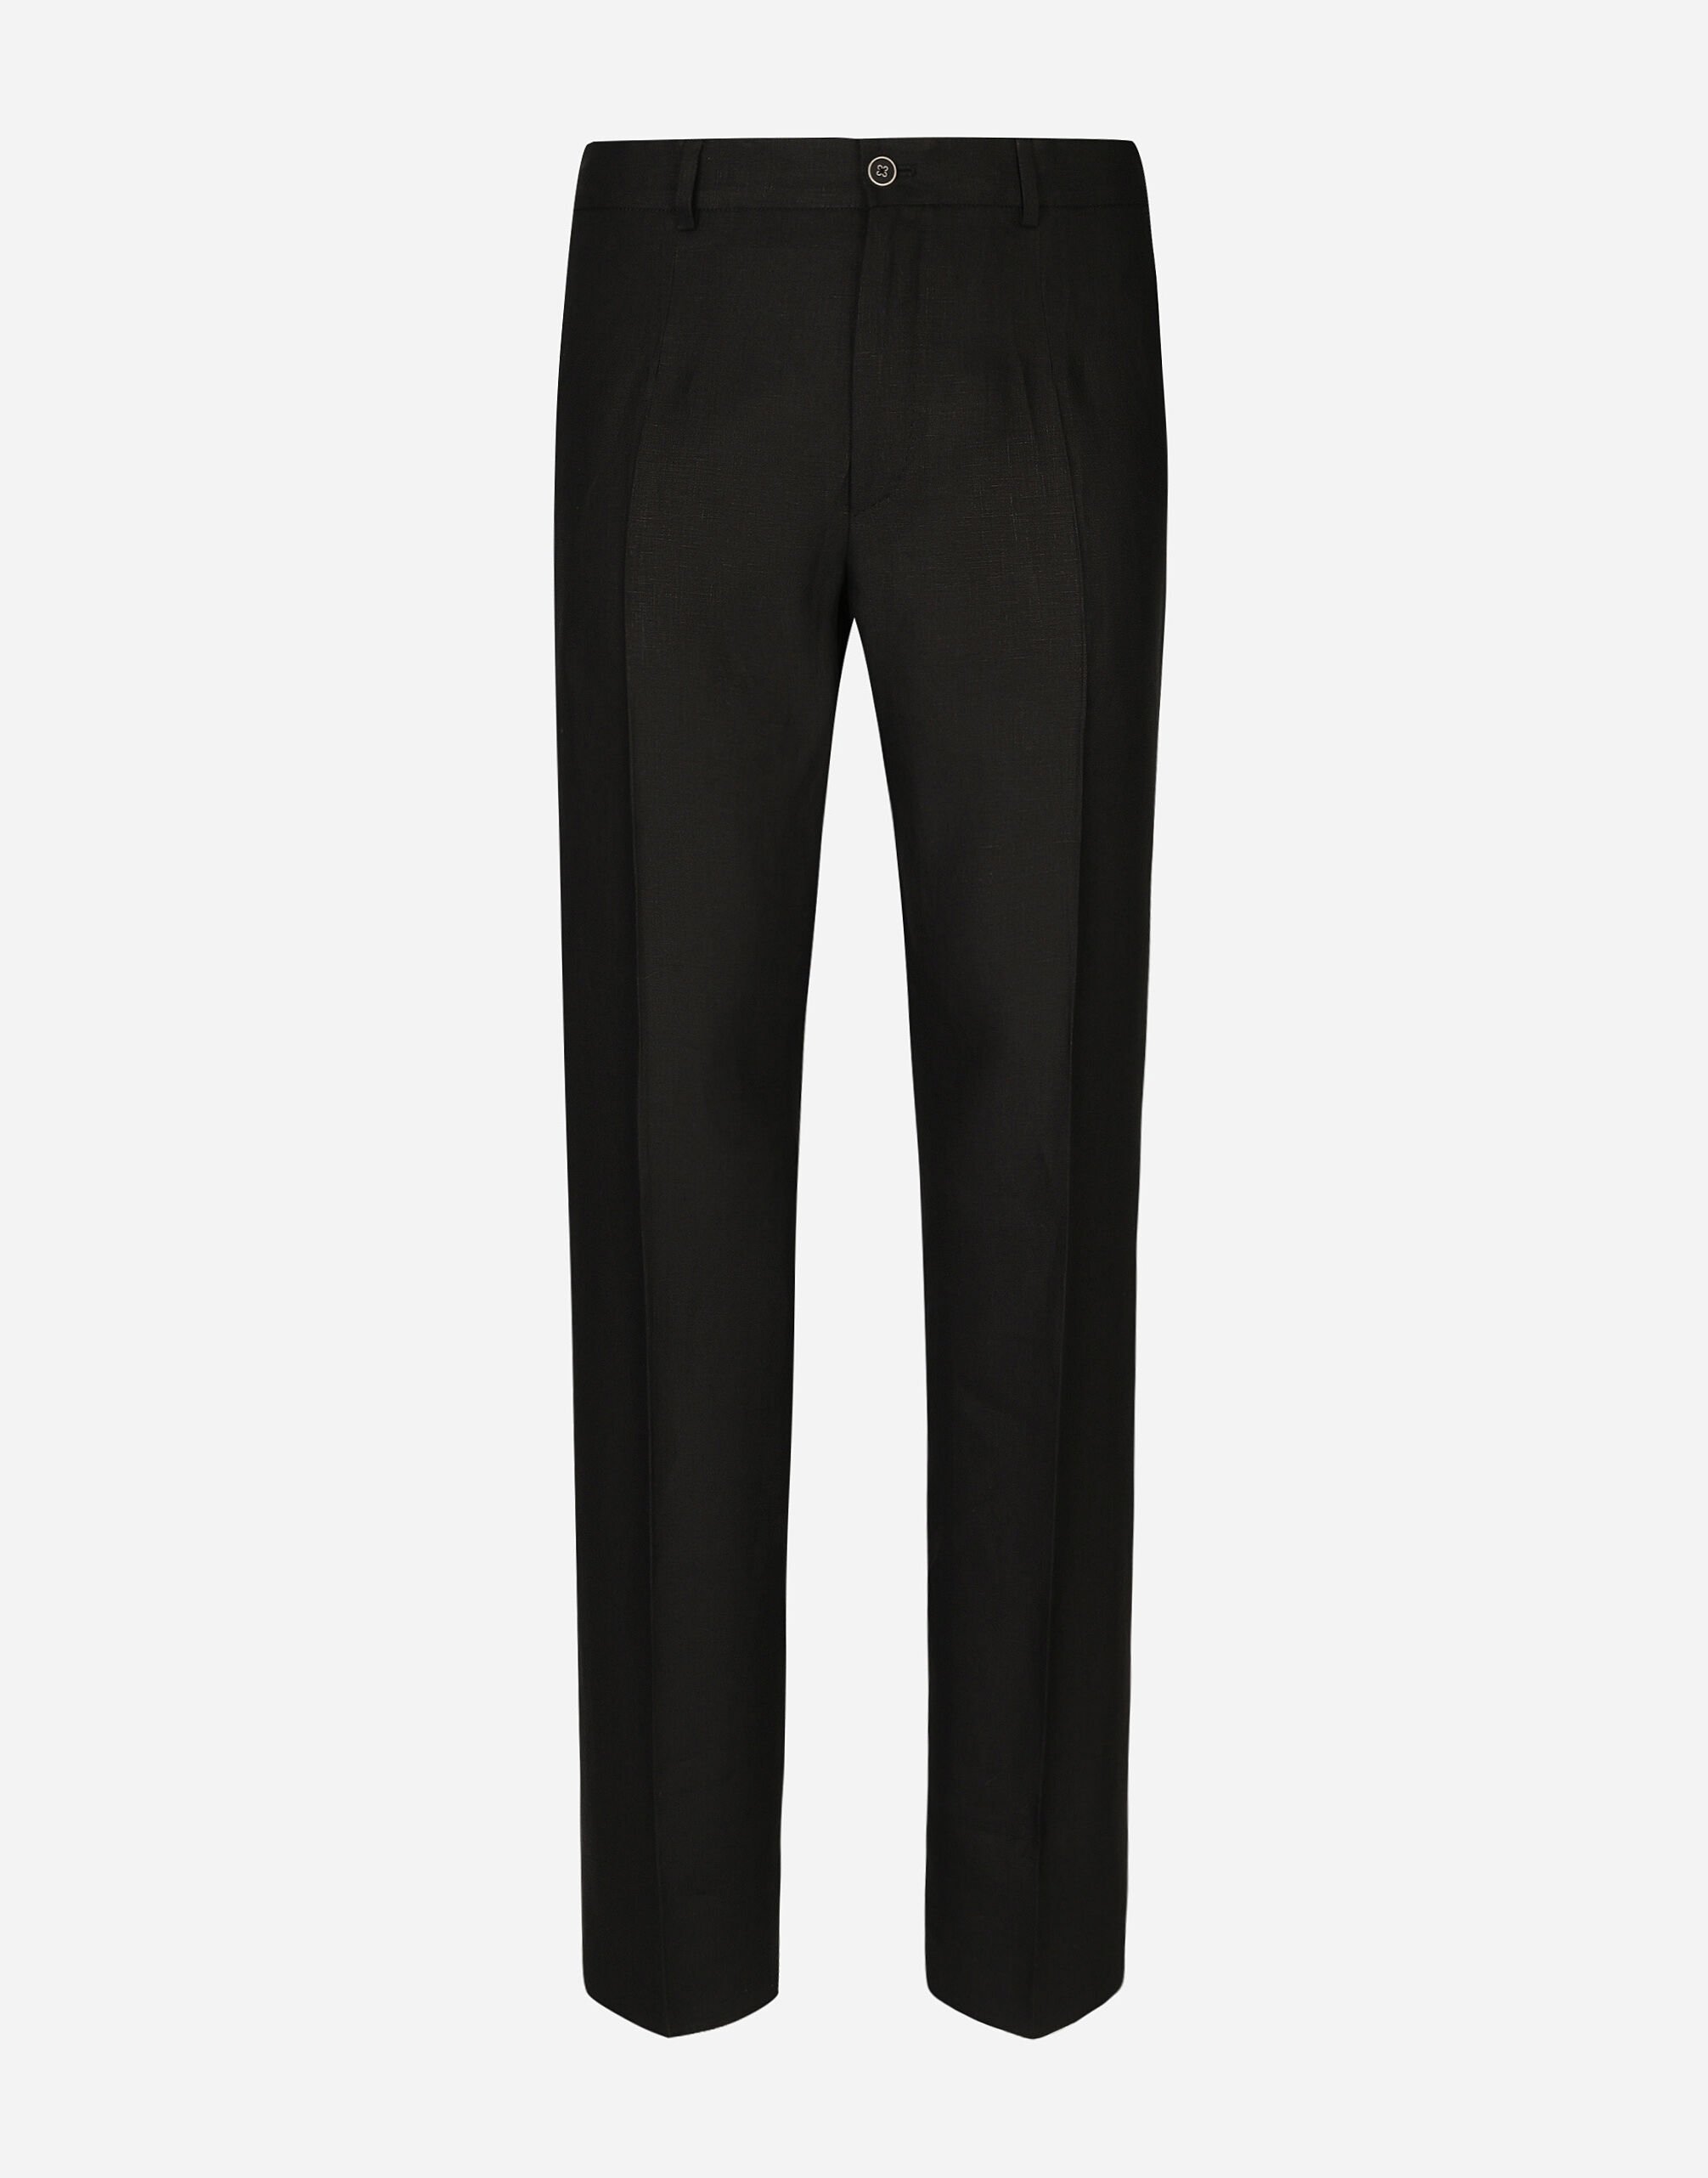 Dolce & Gabbana Tailored stretch cotton pants Black GP03JTGH253